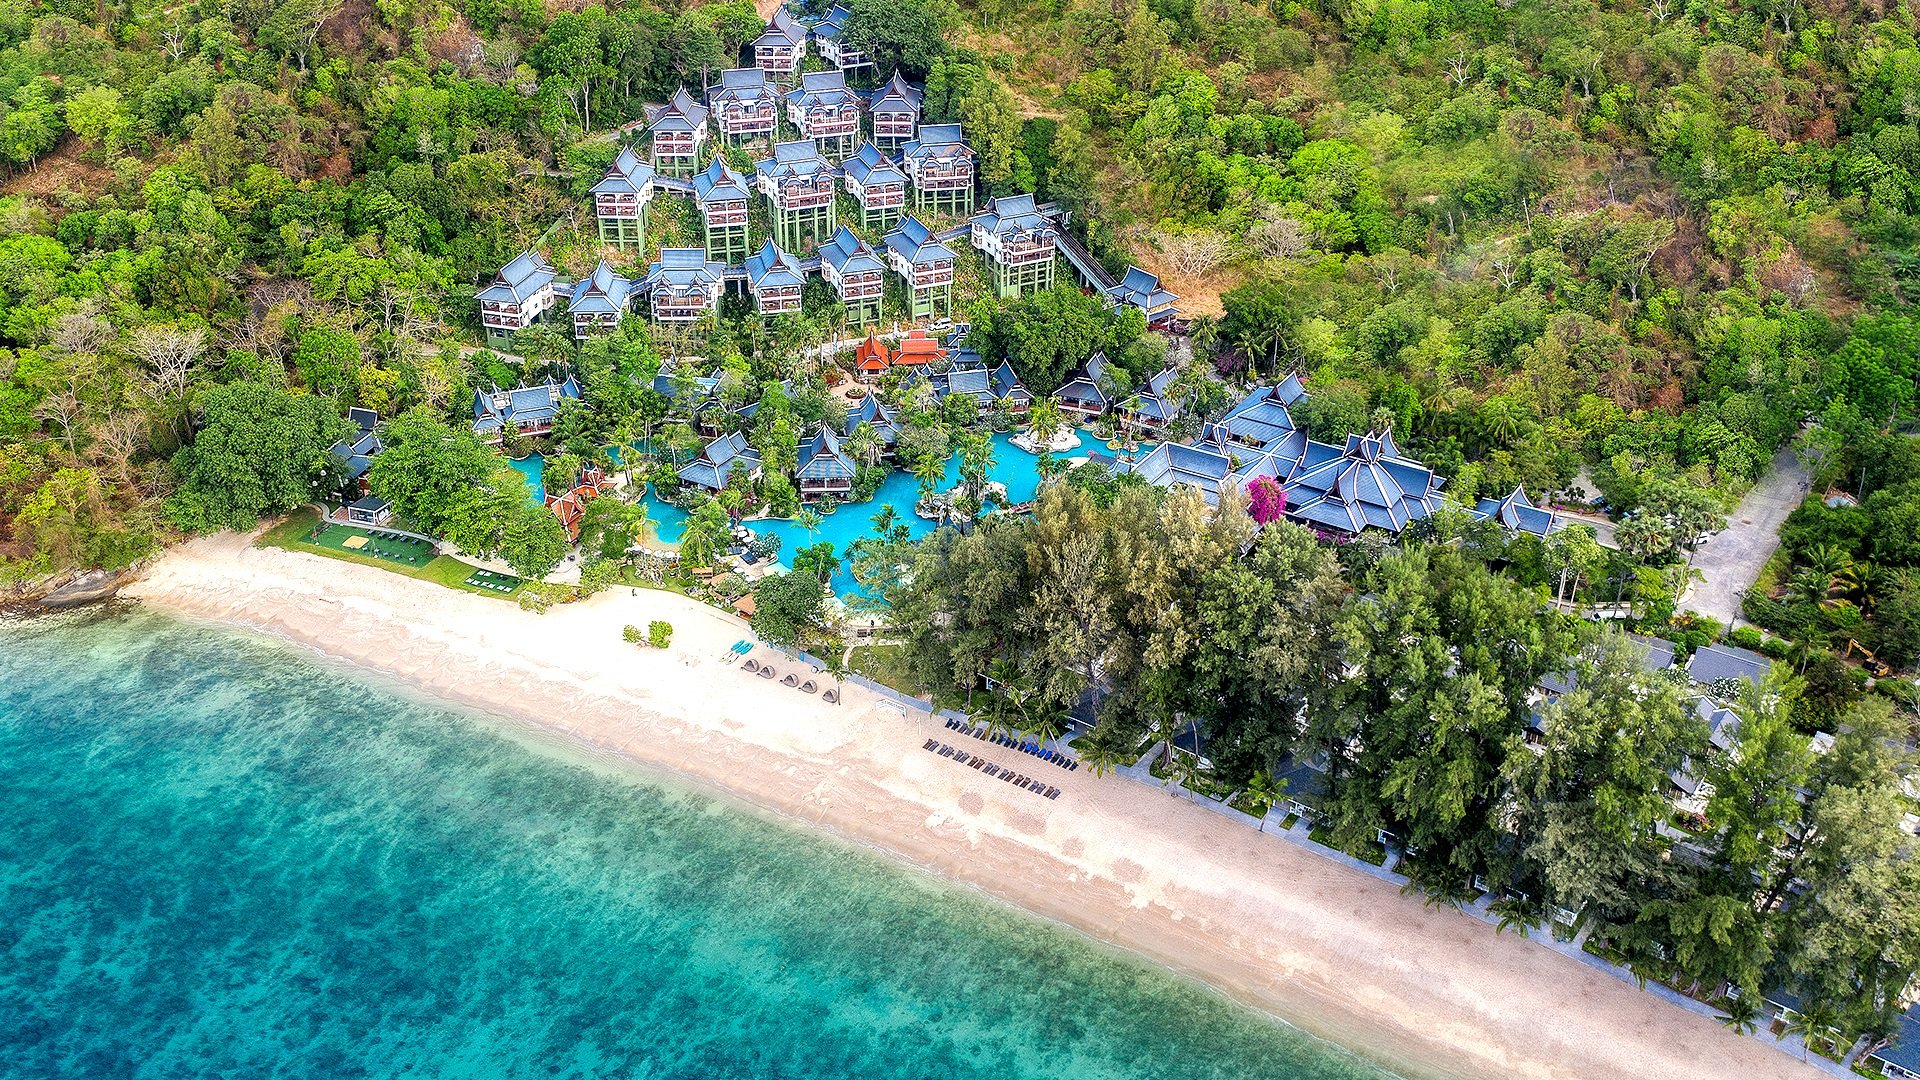 Thavorn beach village resort. Таворн Вилладж Пхукет. Отель Thavorn Beach Village Resort & Spa. Thavorn Beach Village Resort & Spa Phuket 5*. Thavorn отель Тайланд.